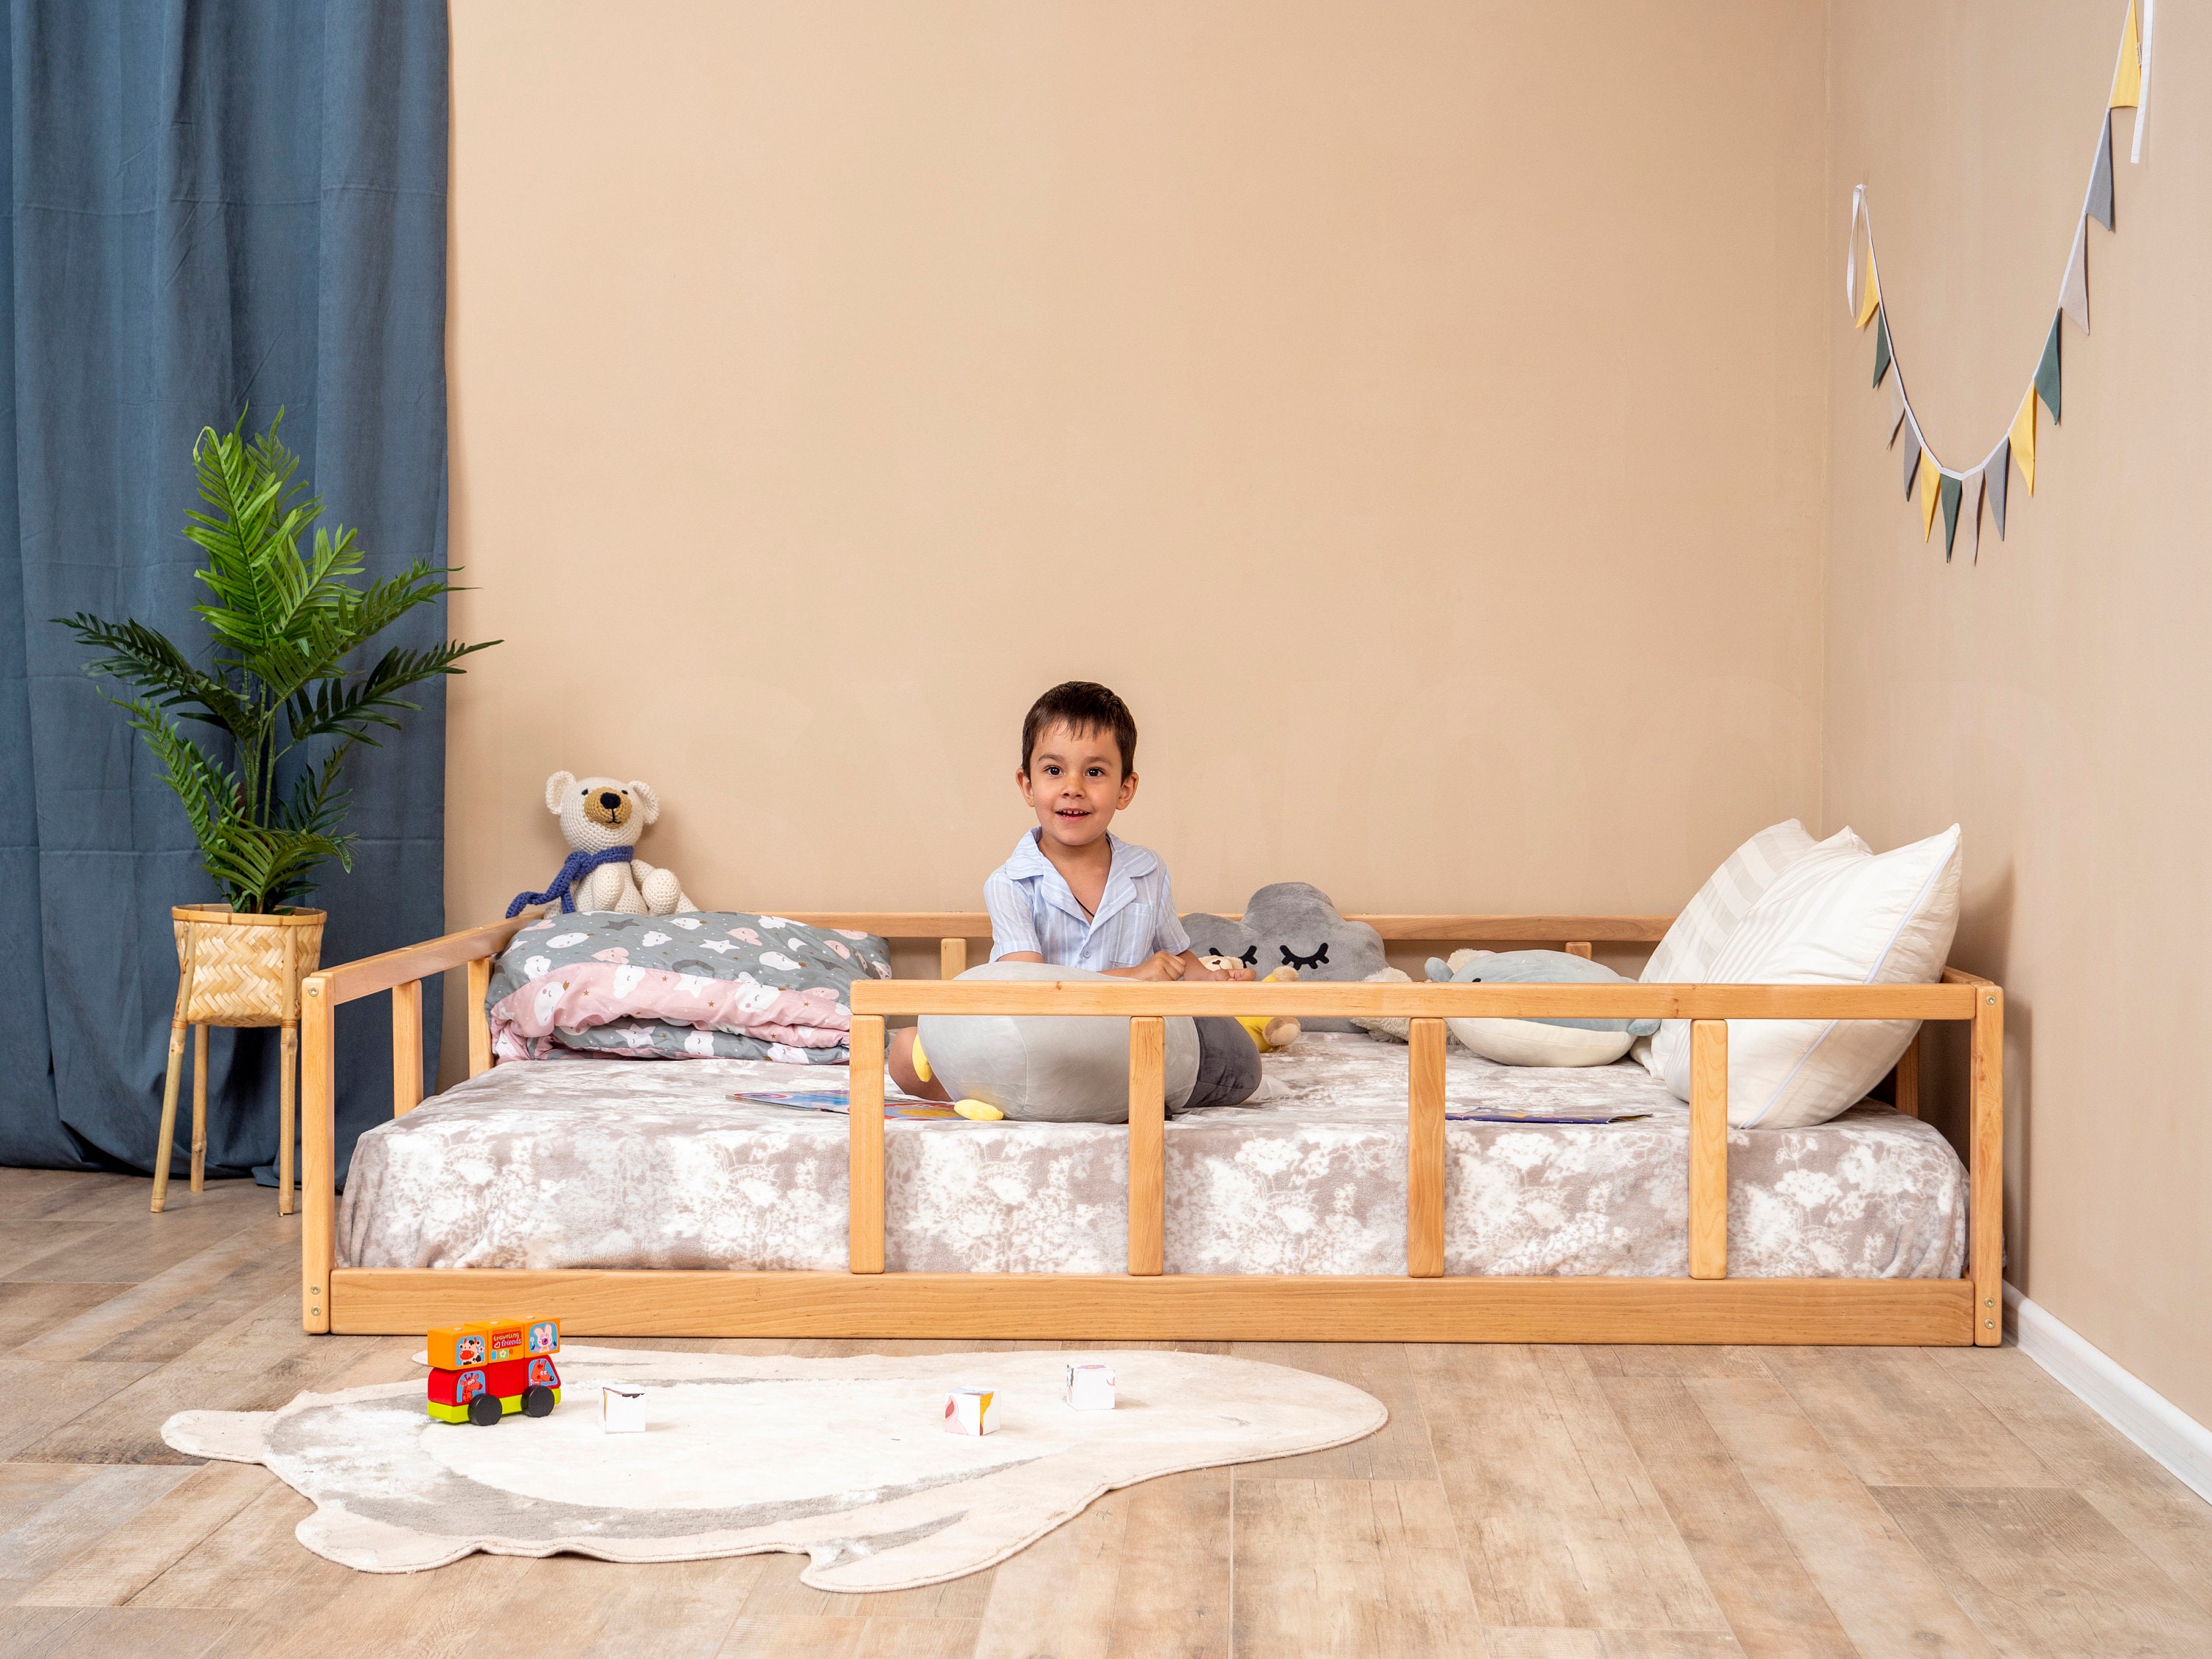 Barandilla de cama infantil TRUSTY - madera maciza - blanco